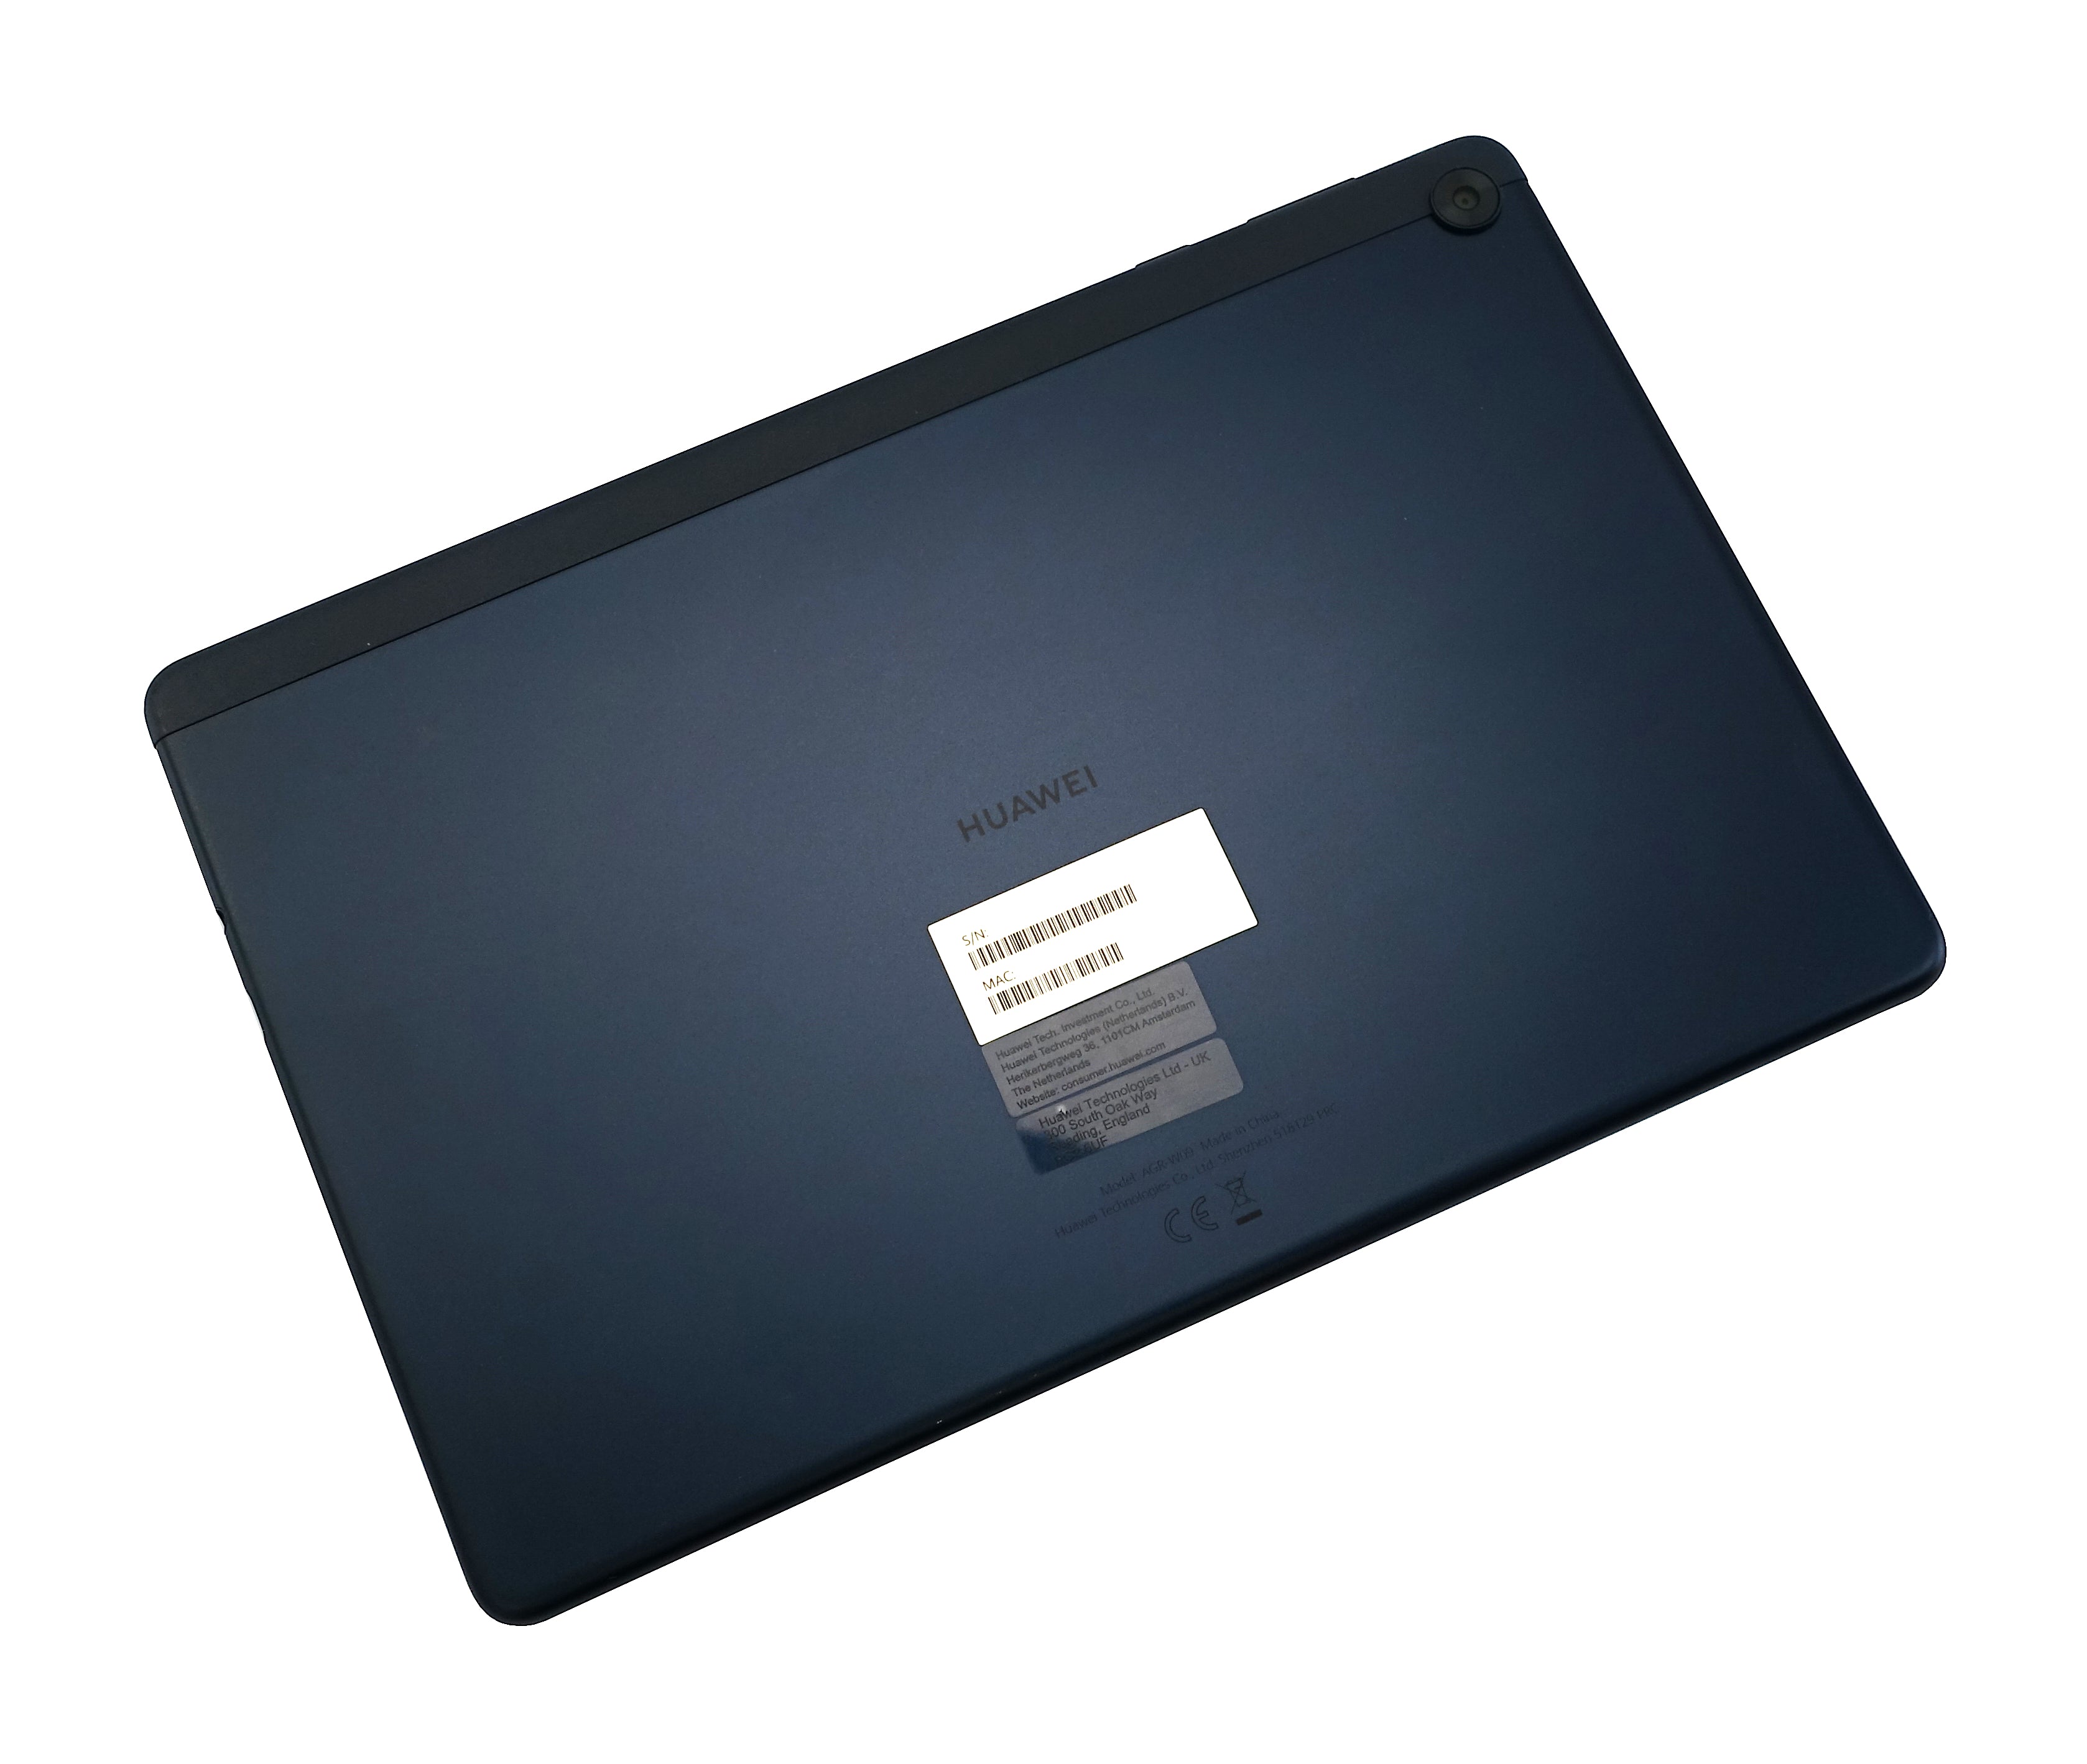 HUAWEI MatePad T10 Tablet, 9.7", 16GB, WiFi, Blue, AGR-W09